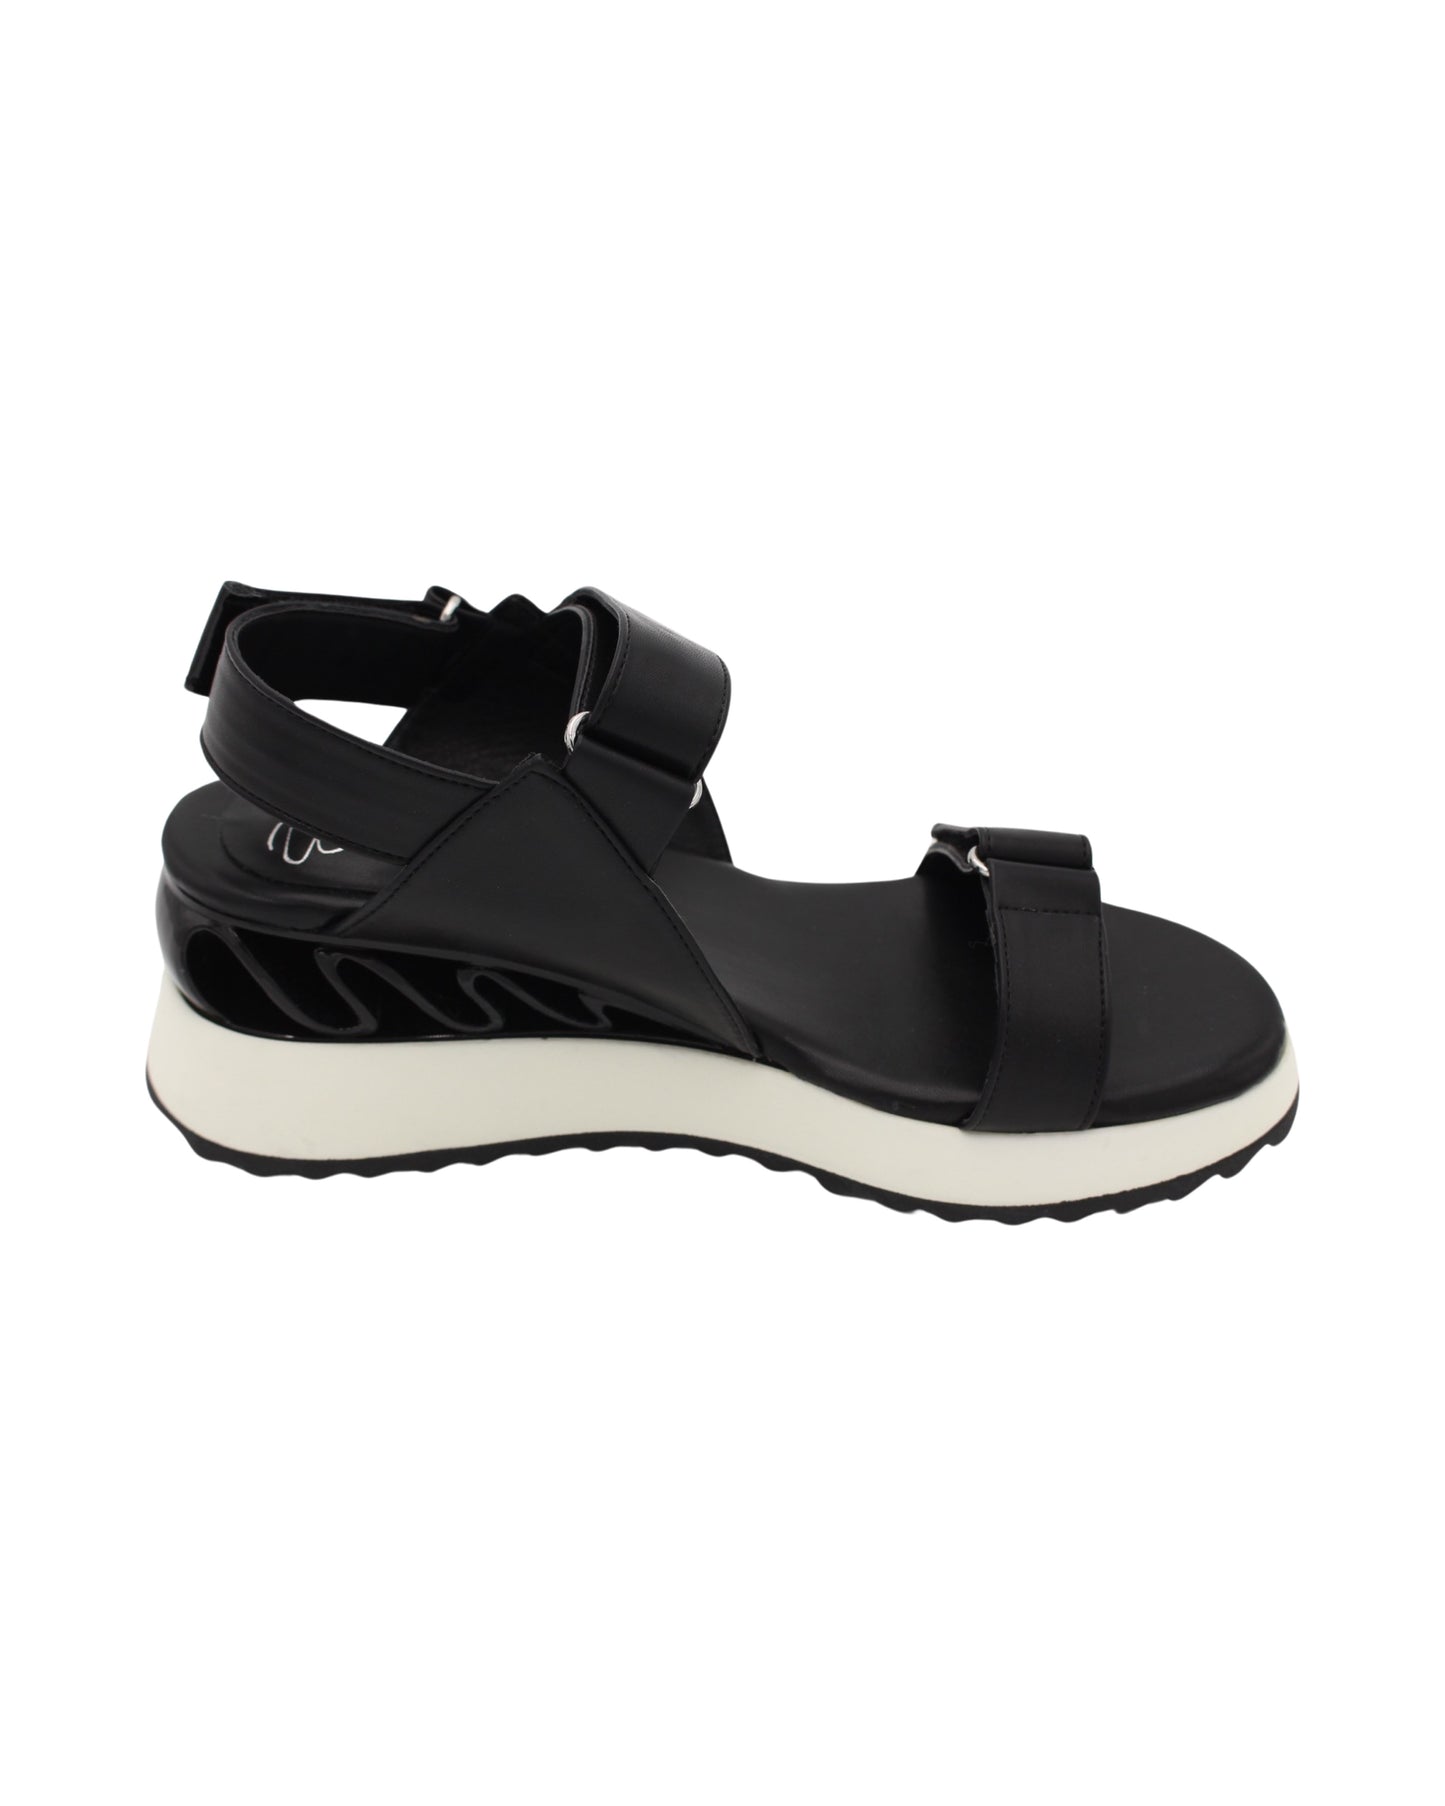 Una Healy - Ladies Shoes Sandals Black (2403)